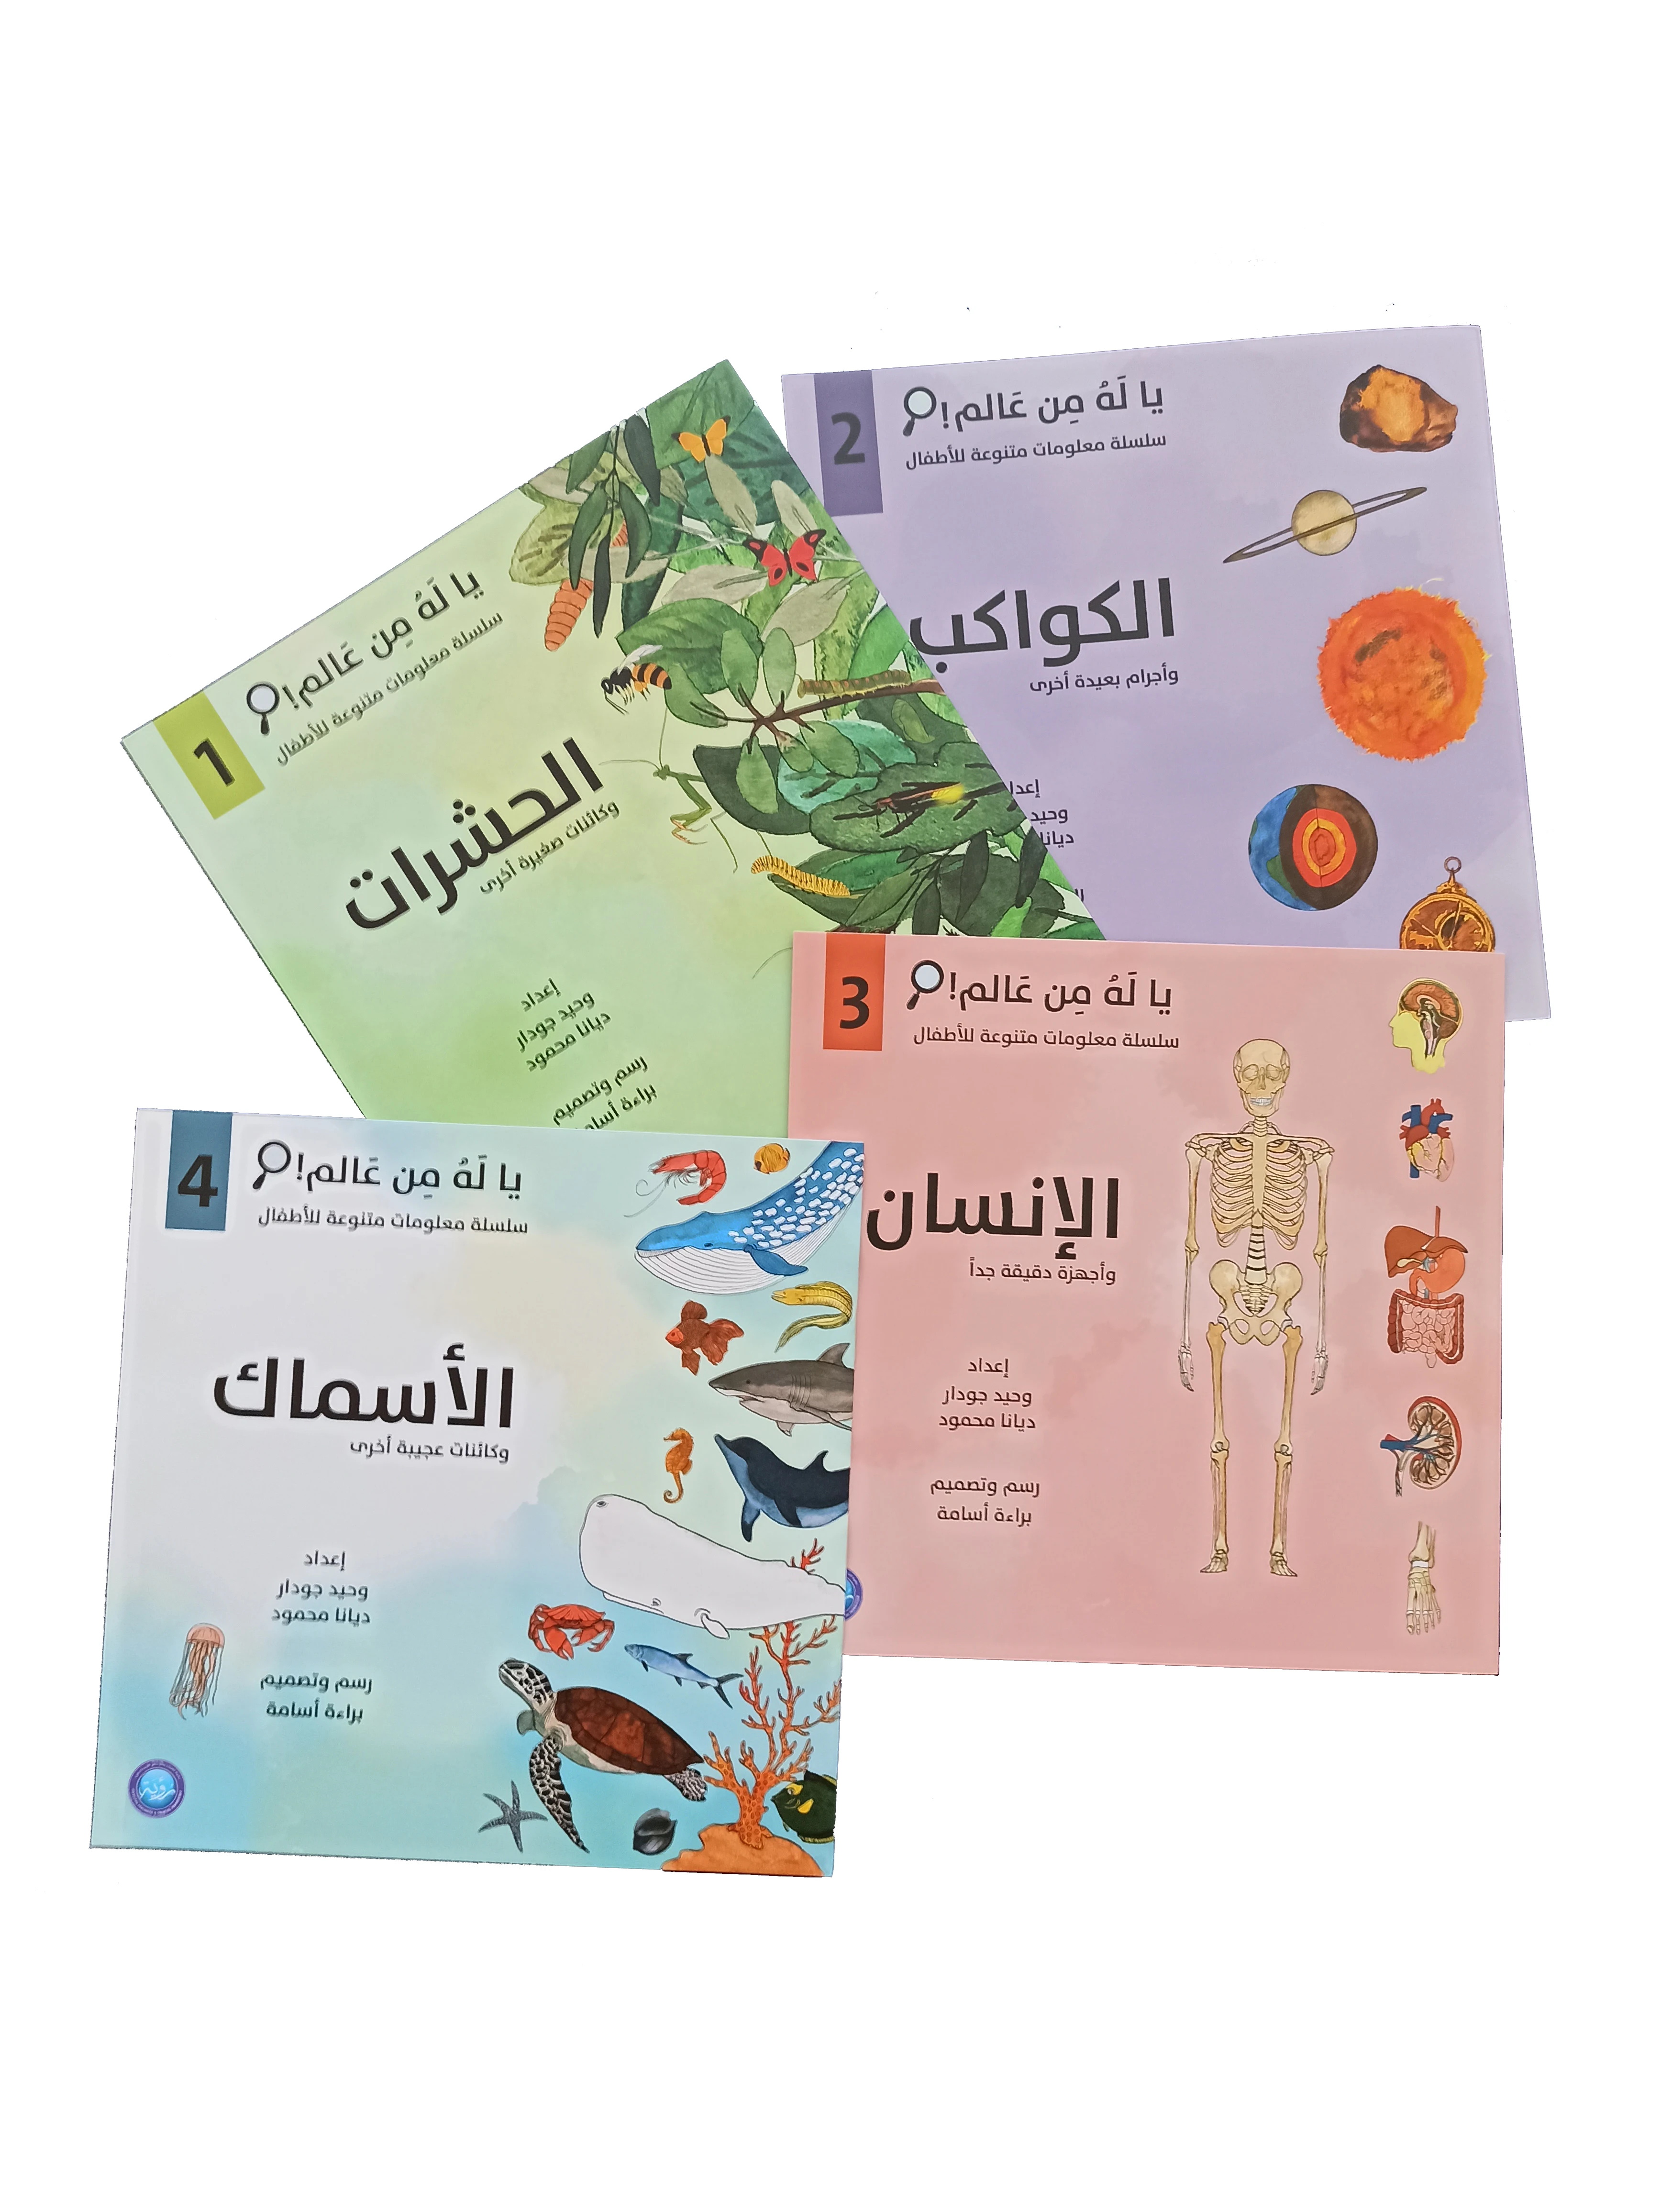 arabic言語の教育写真人間の解剖学の写真イスラム教徒の子供のための